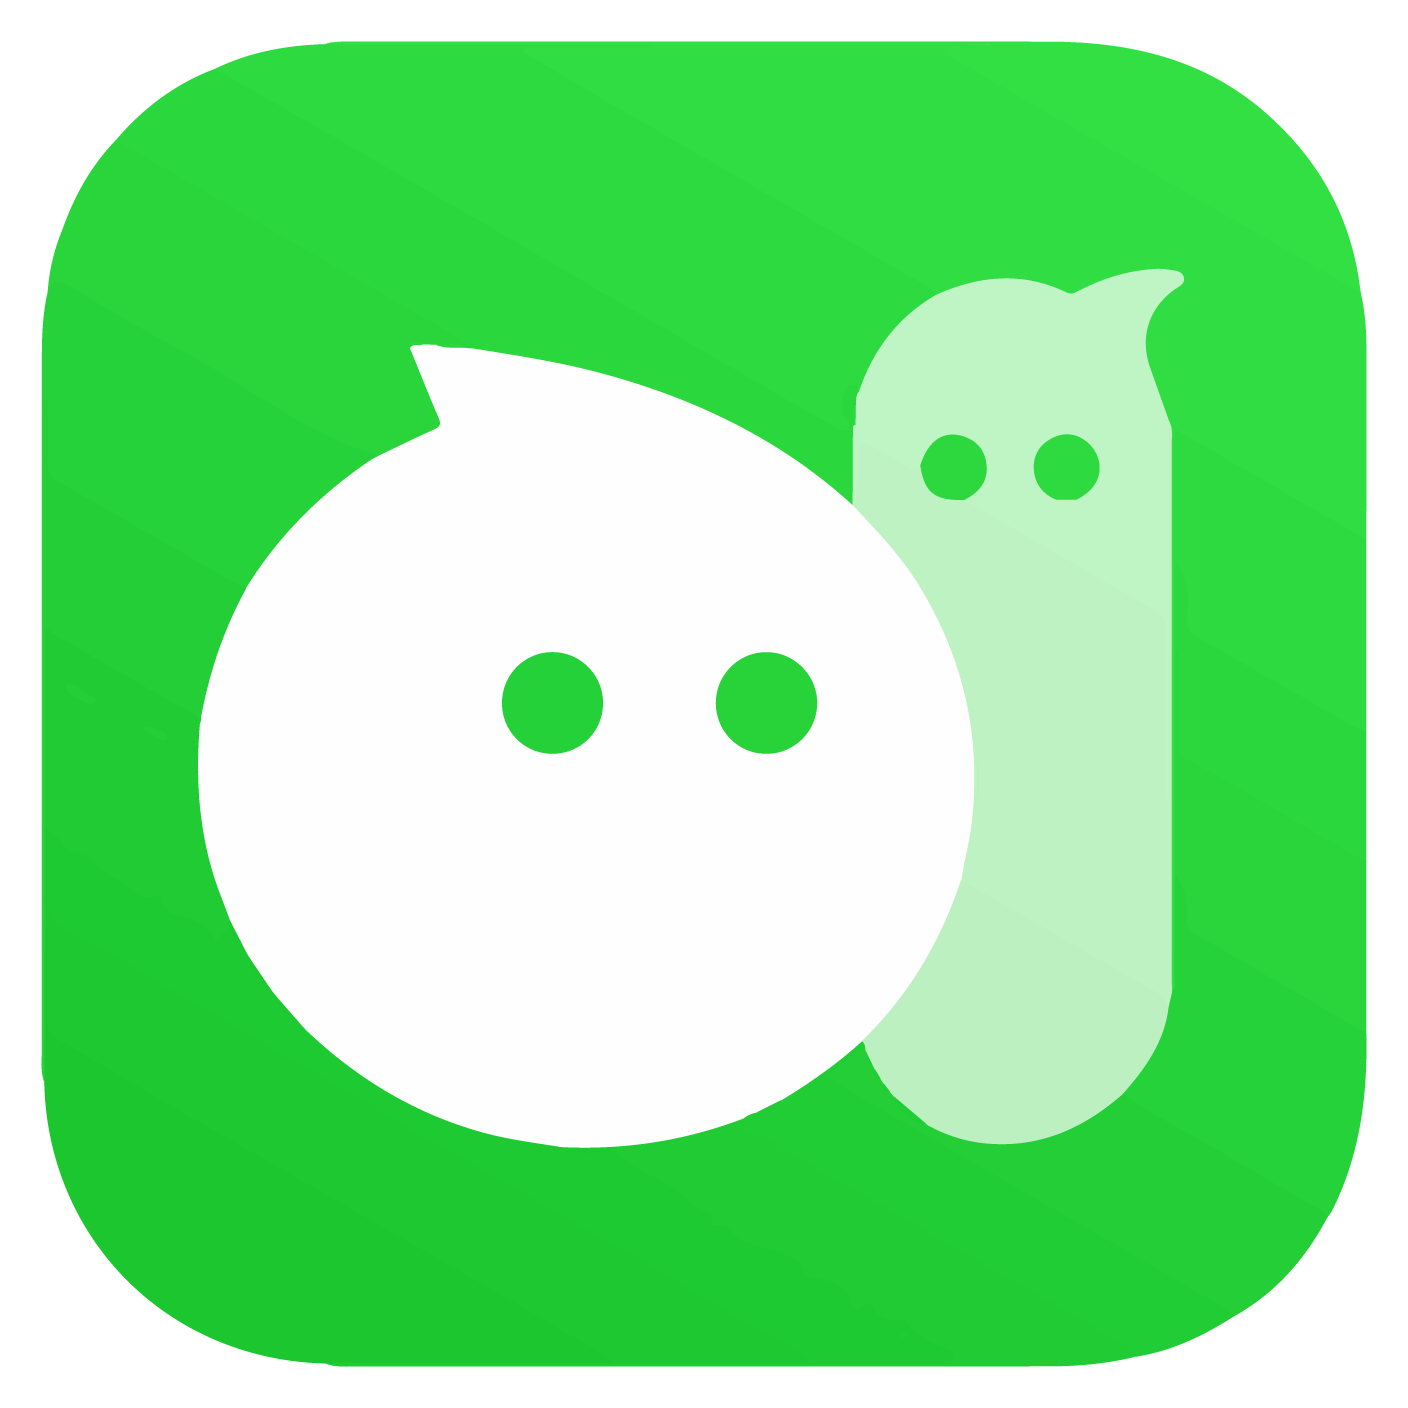 MiChat Logo png